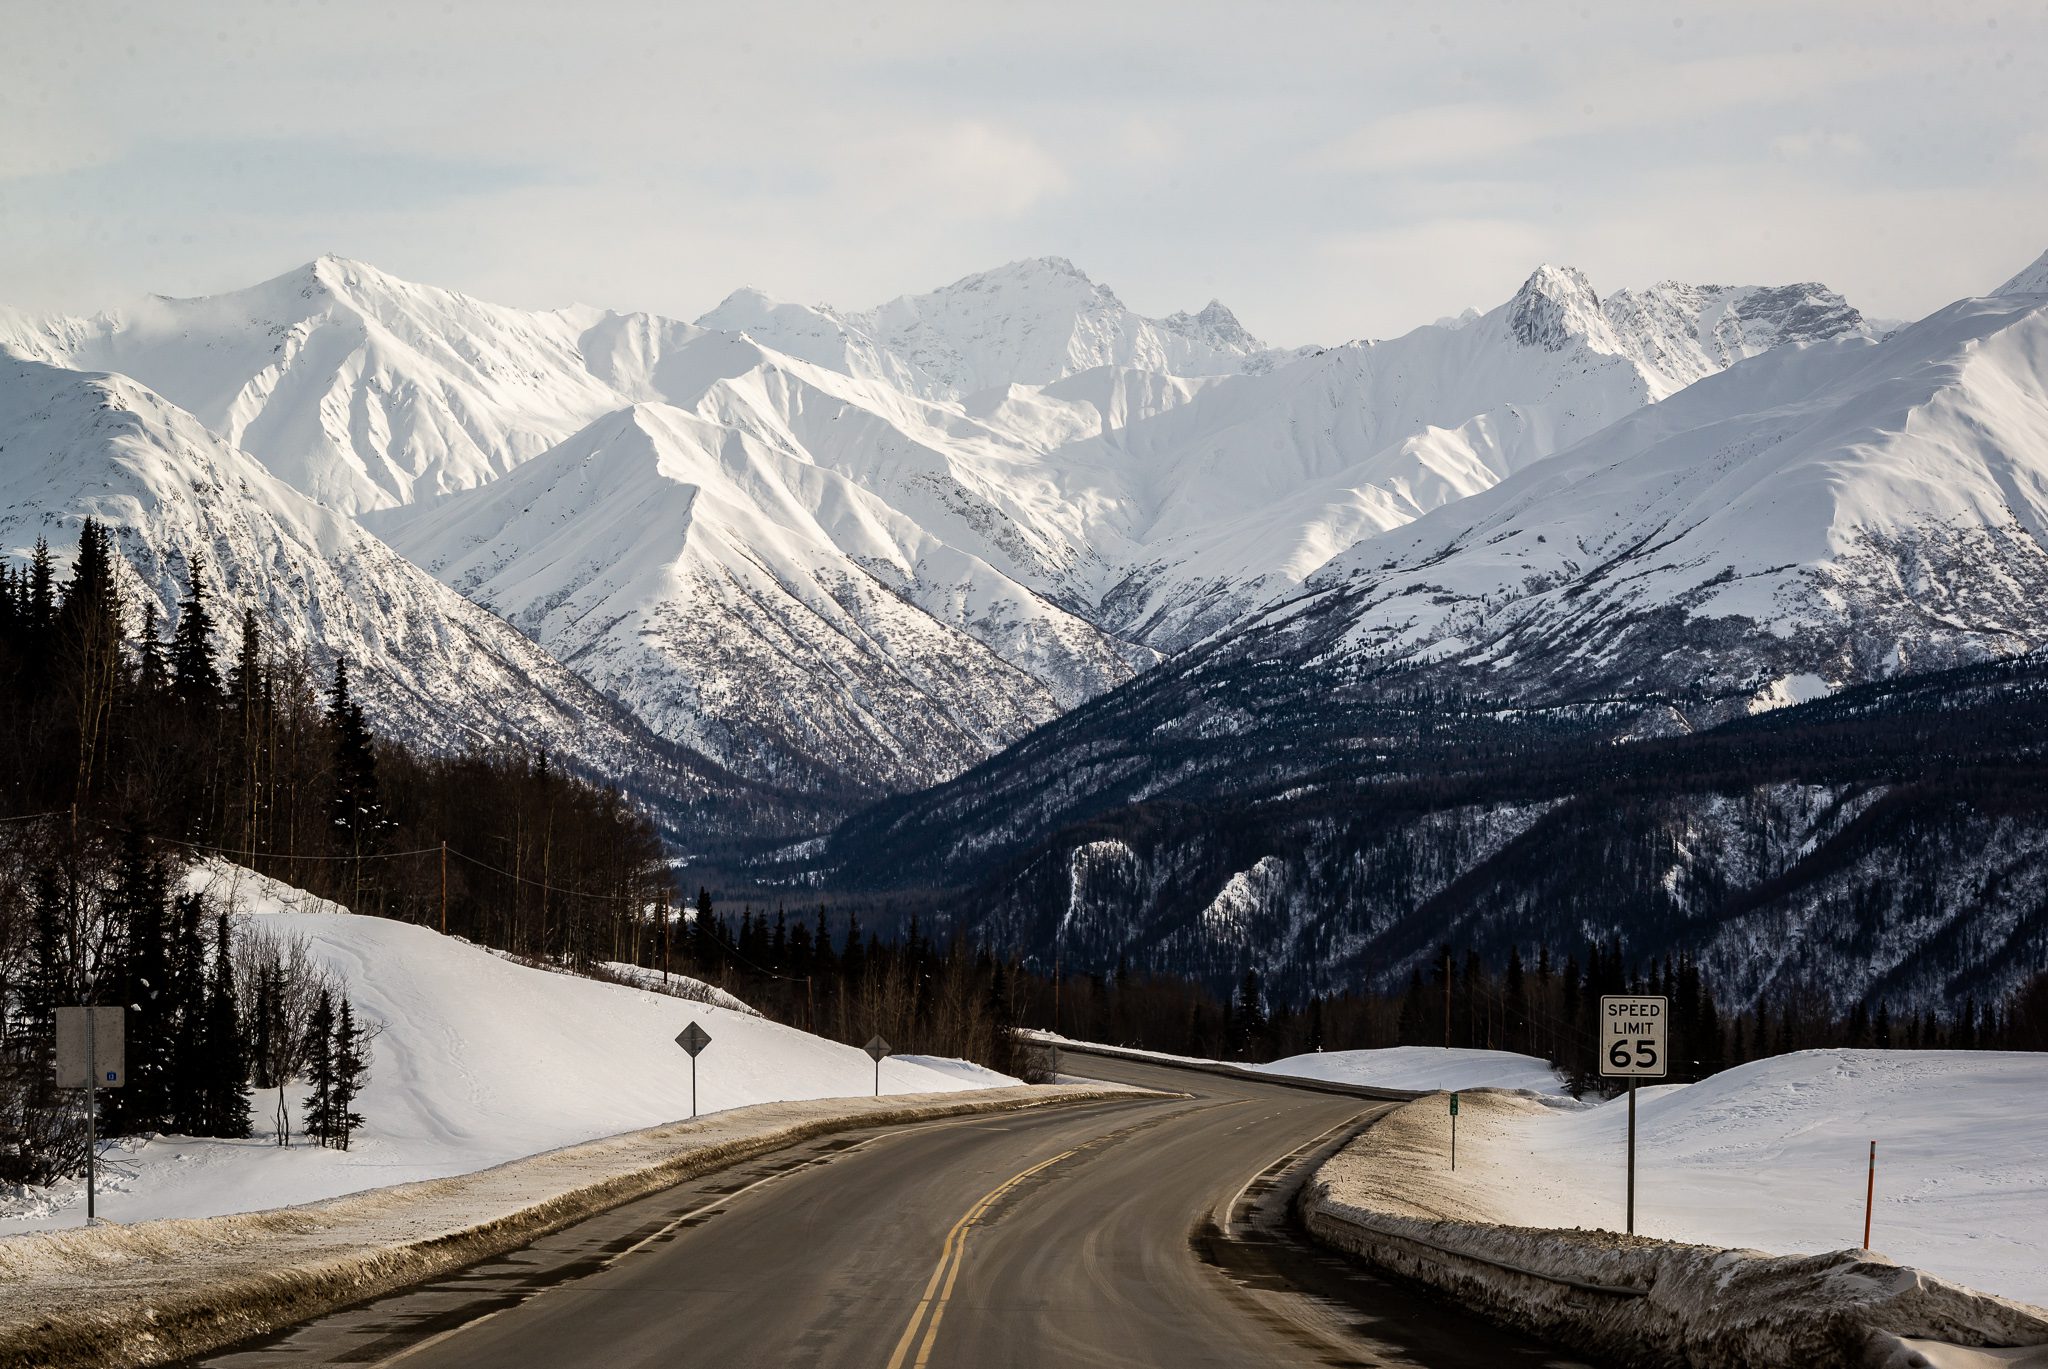 Glenn Highway to Matanuska Glacier